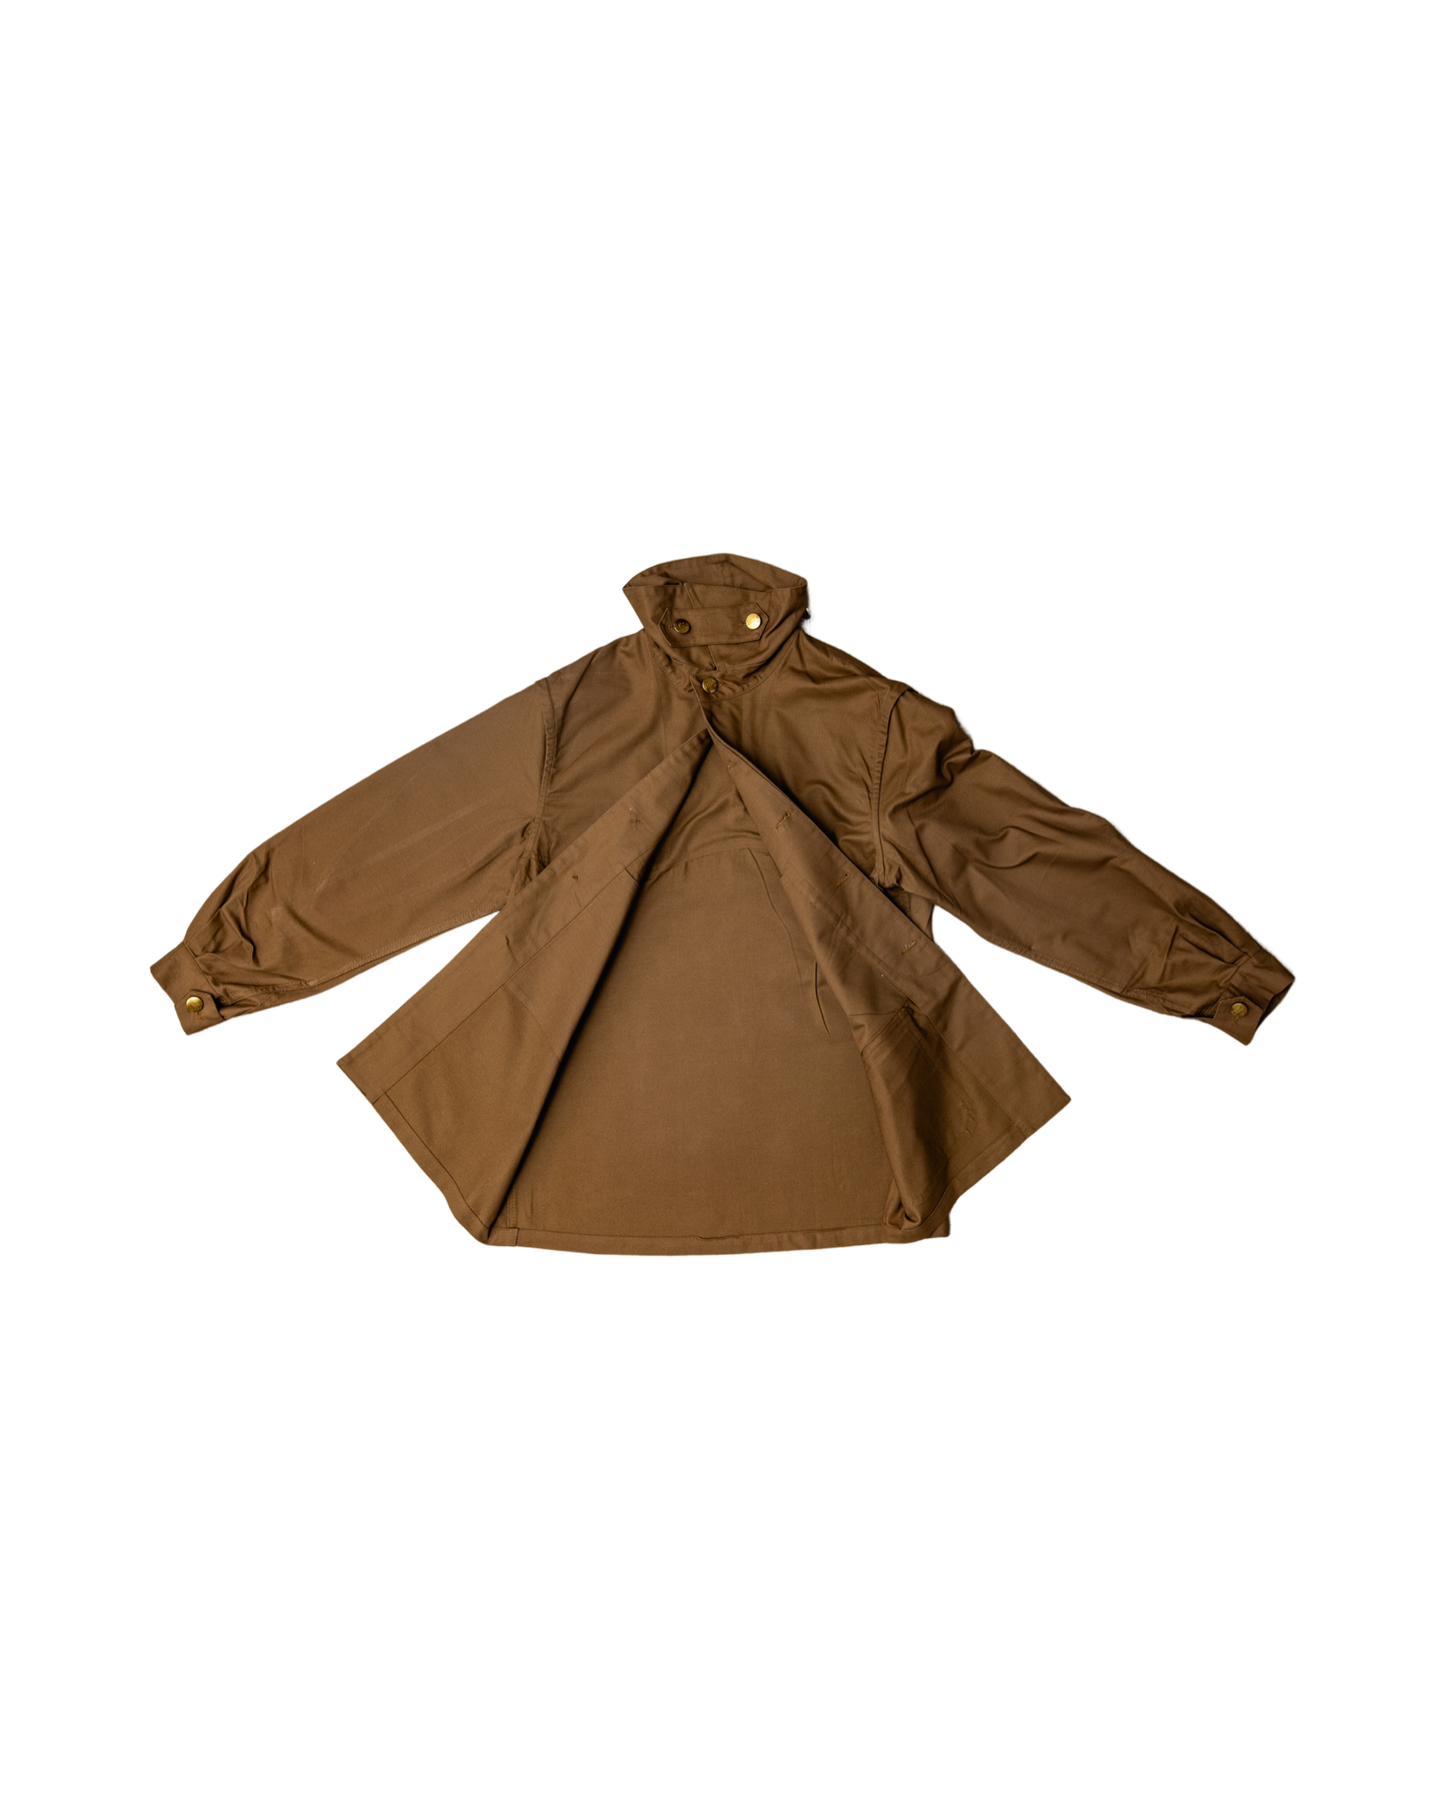 Wholesale - The Stormcoat